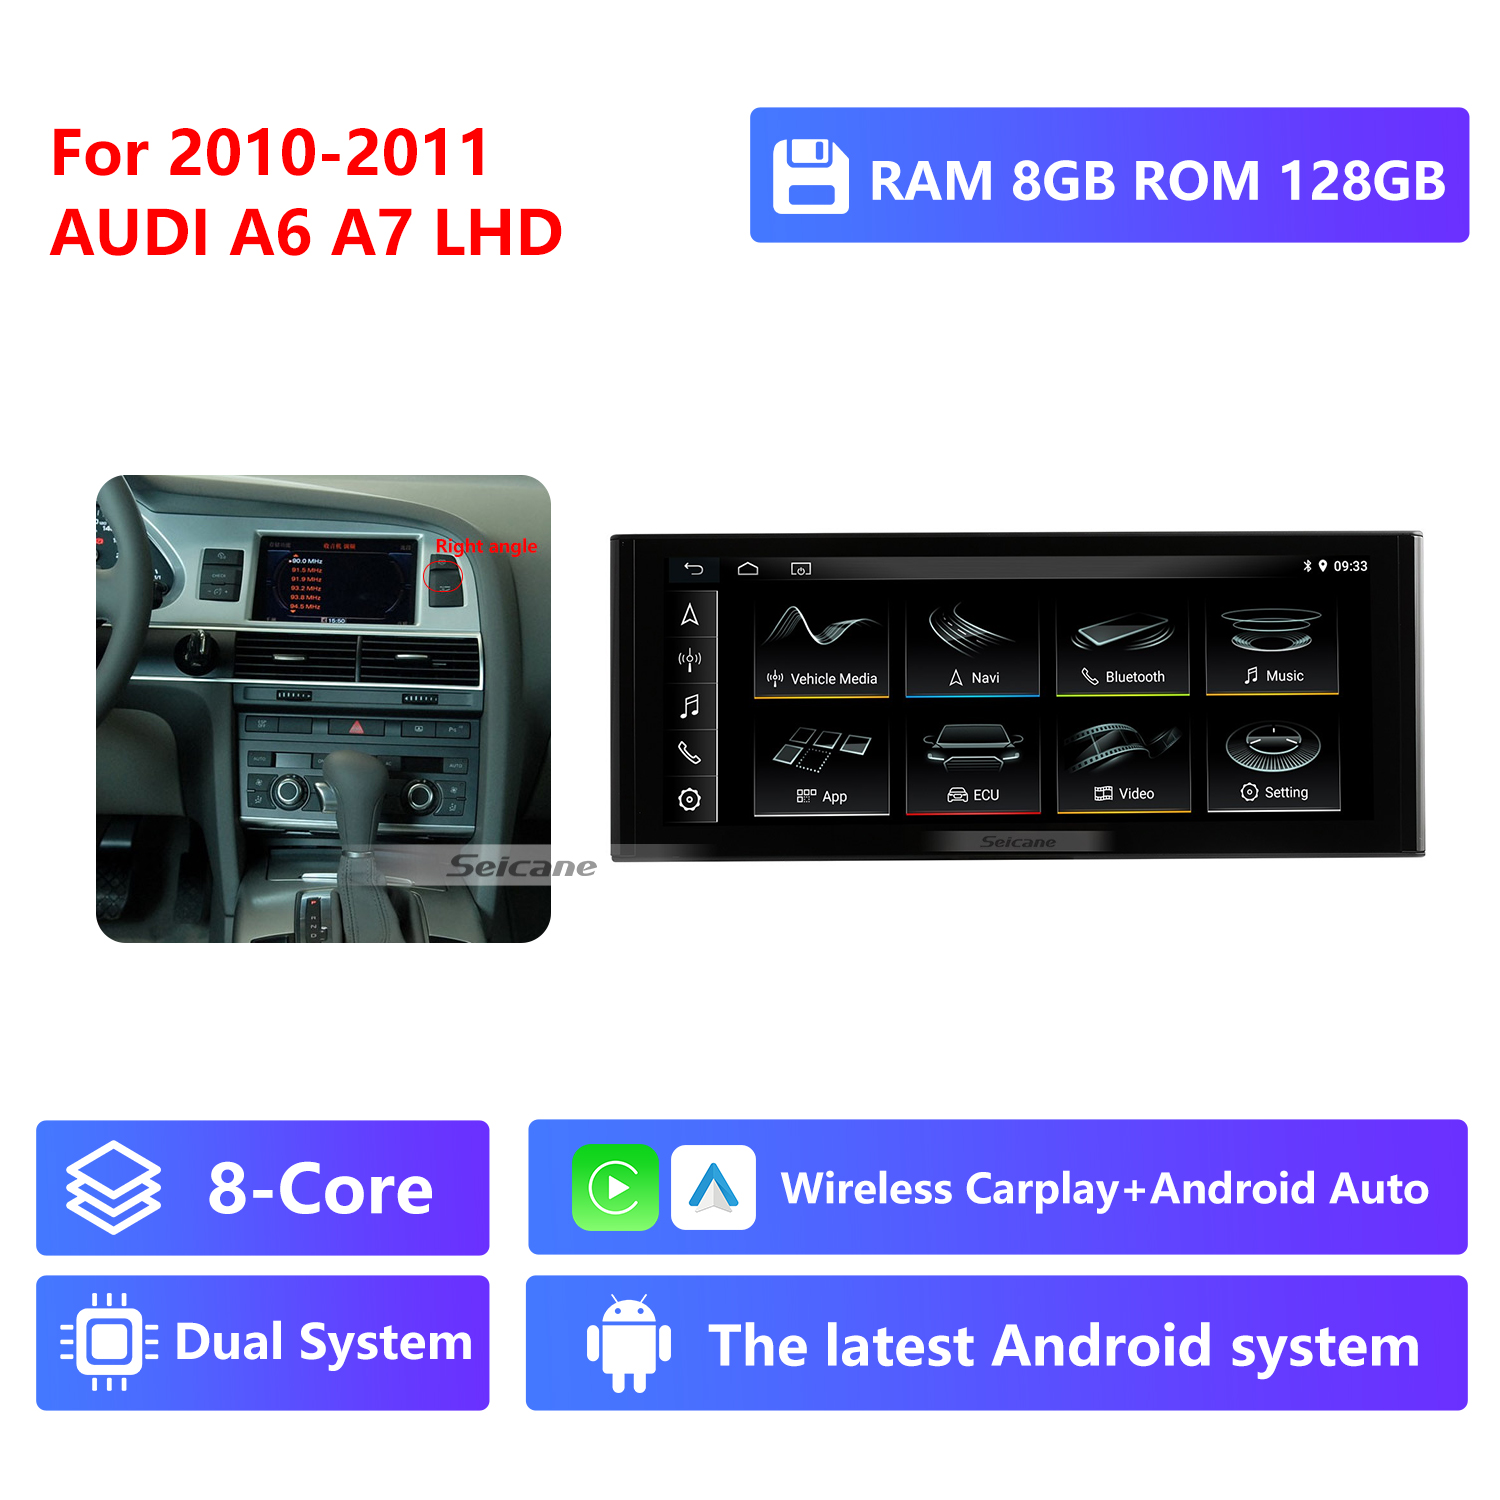 8-Core RAM 8G ROM 128G,2010-2011,LHD